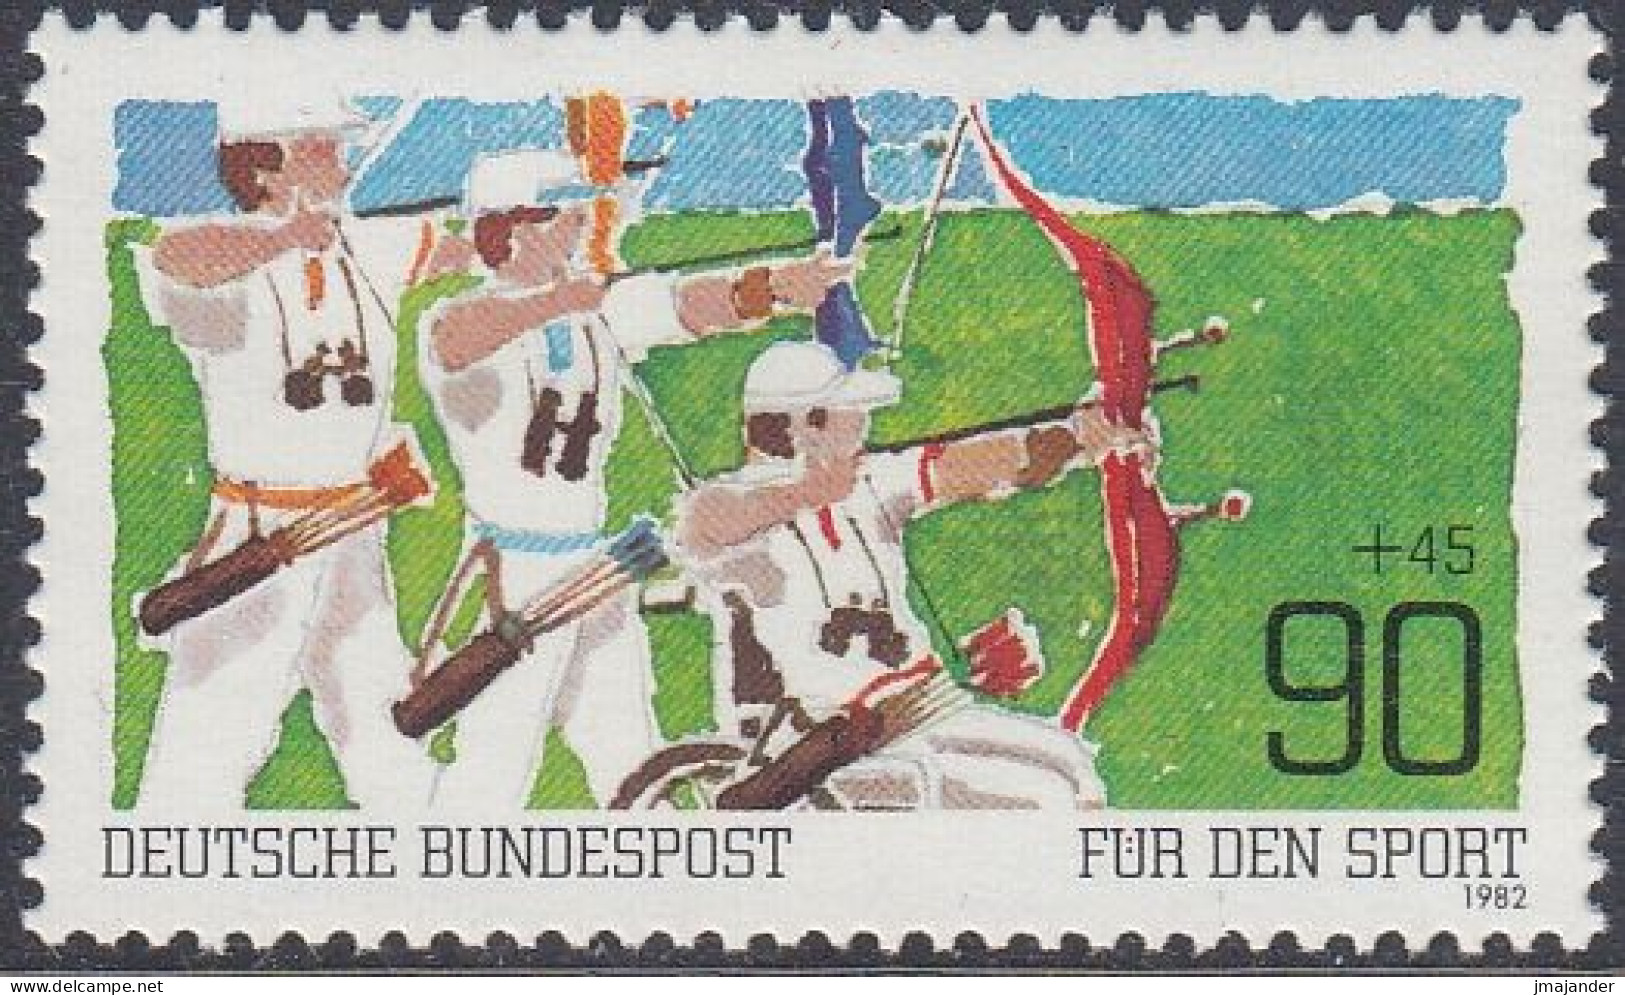 Germany 1982 - Sport: Archery - Mi 1128 ** MNH [1767] - Bogenschiessen